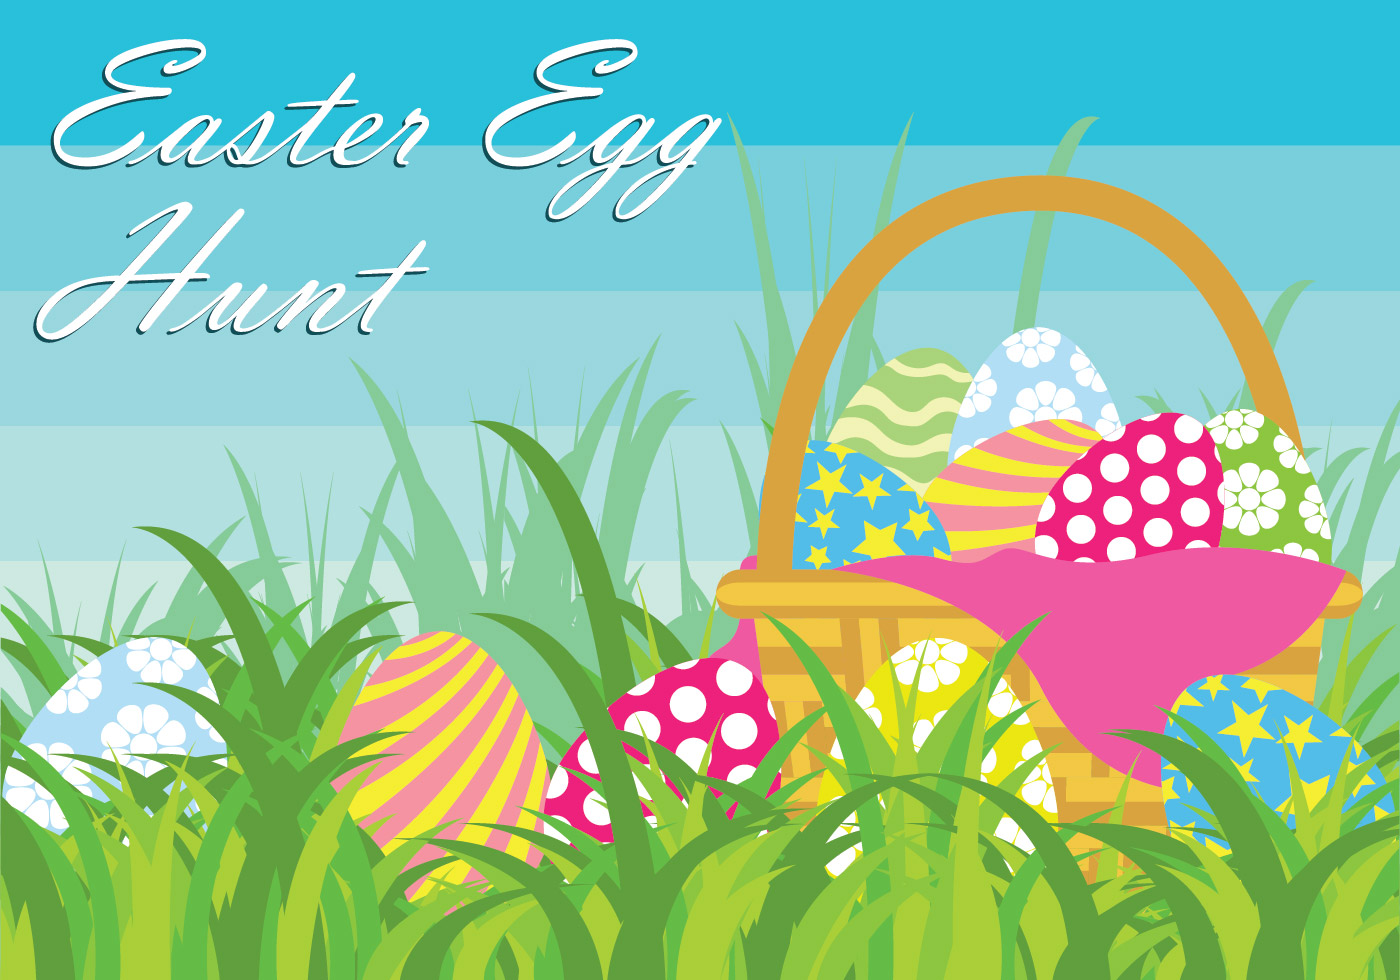 Download Easter Egg Hunt Vector Illustration 146059 Vector Art at Vecteezy